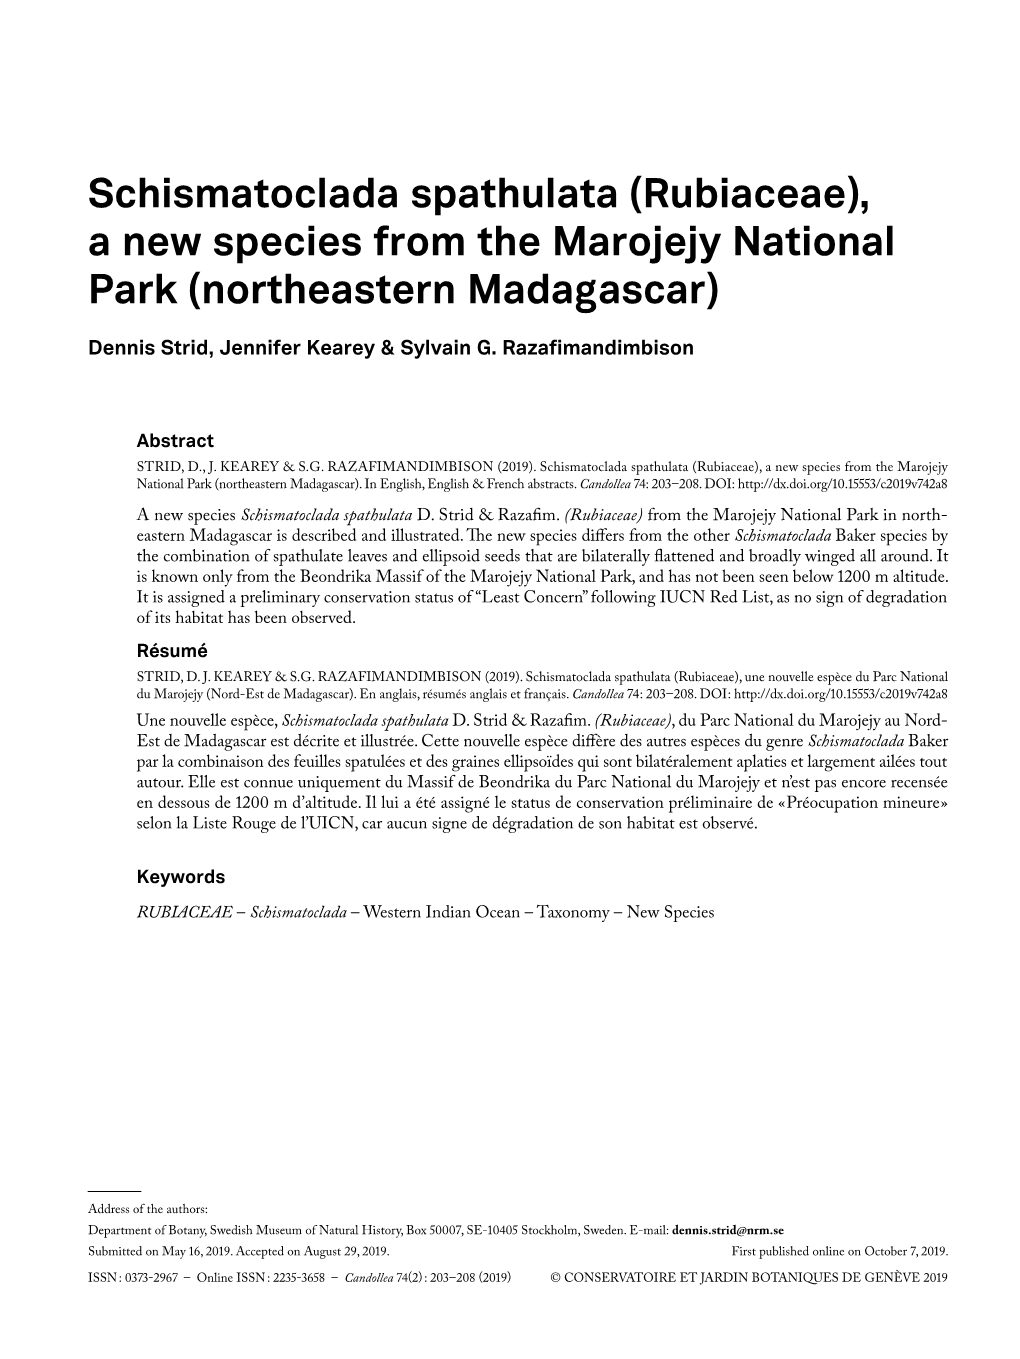 Schismatoclada Spathulata (Rubiaceae), a New Species from the Marojejy National Park (Northeastern Madagascar)